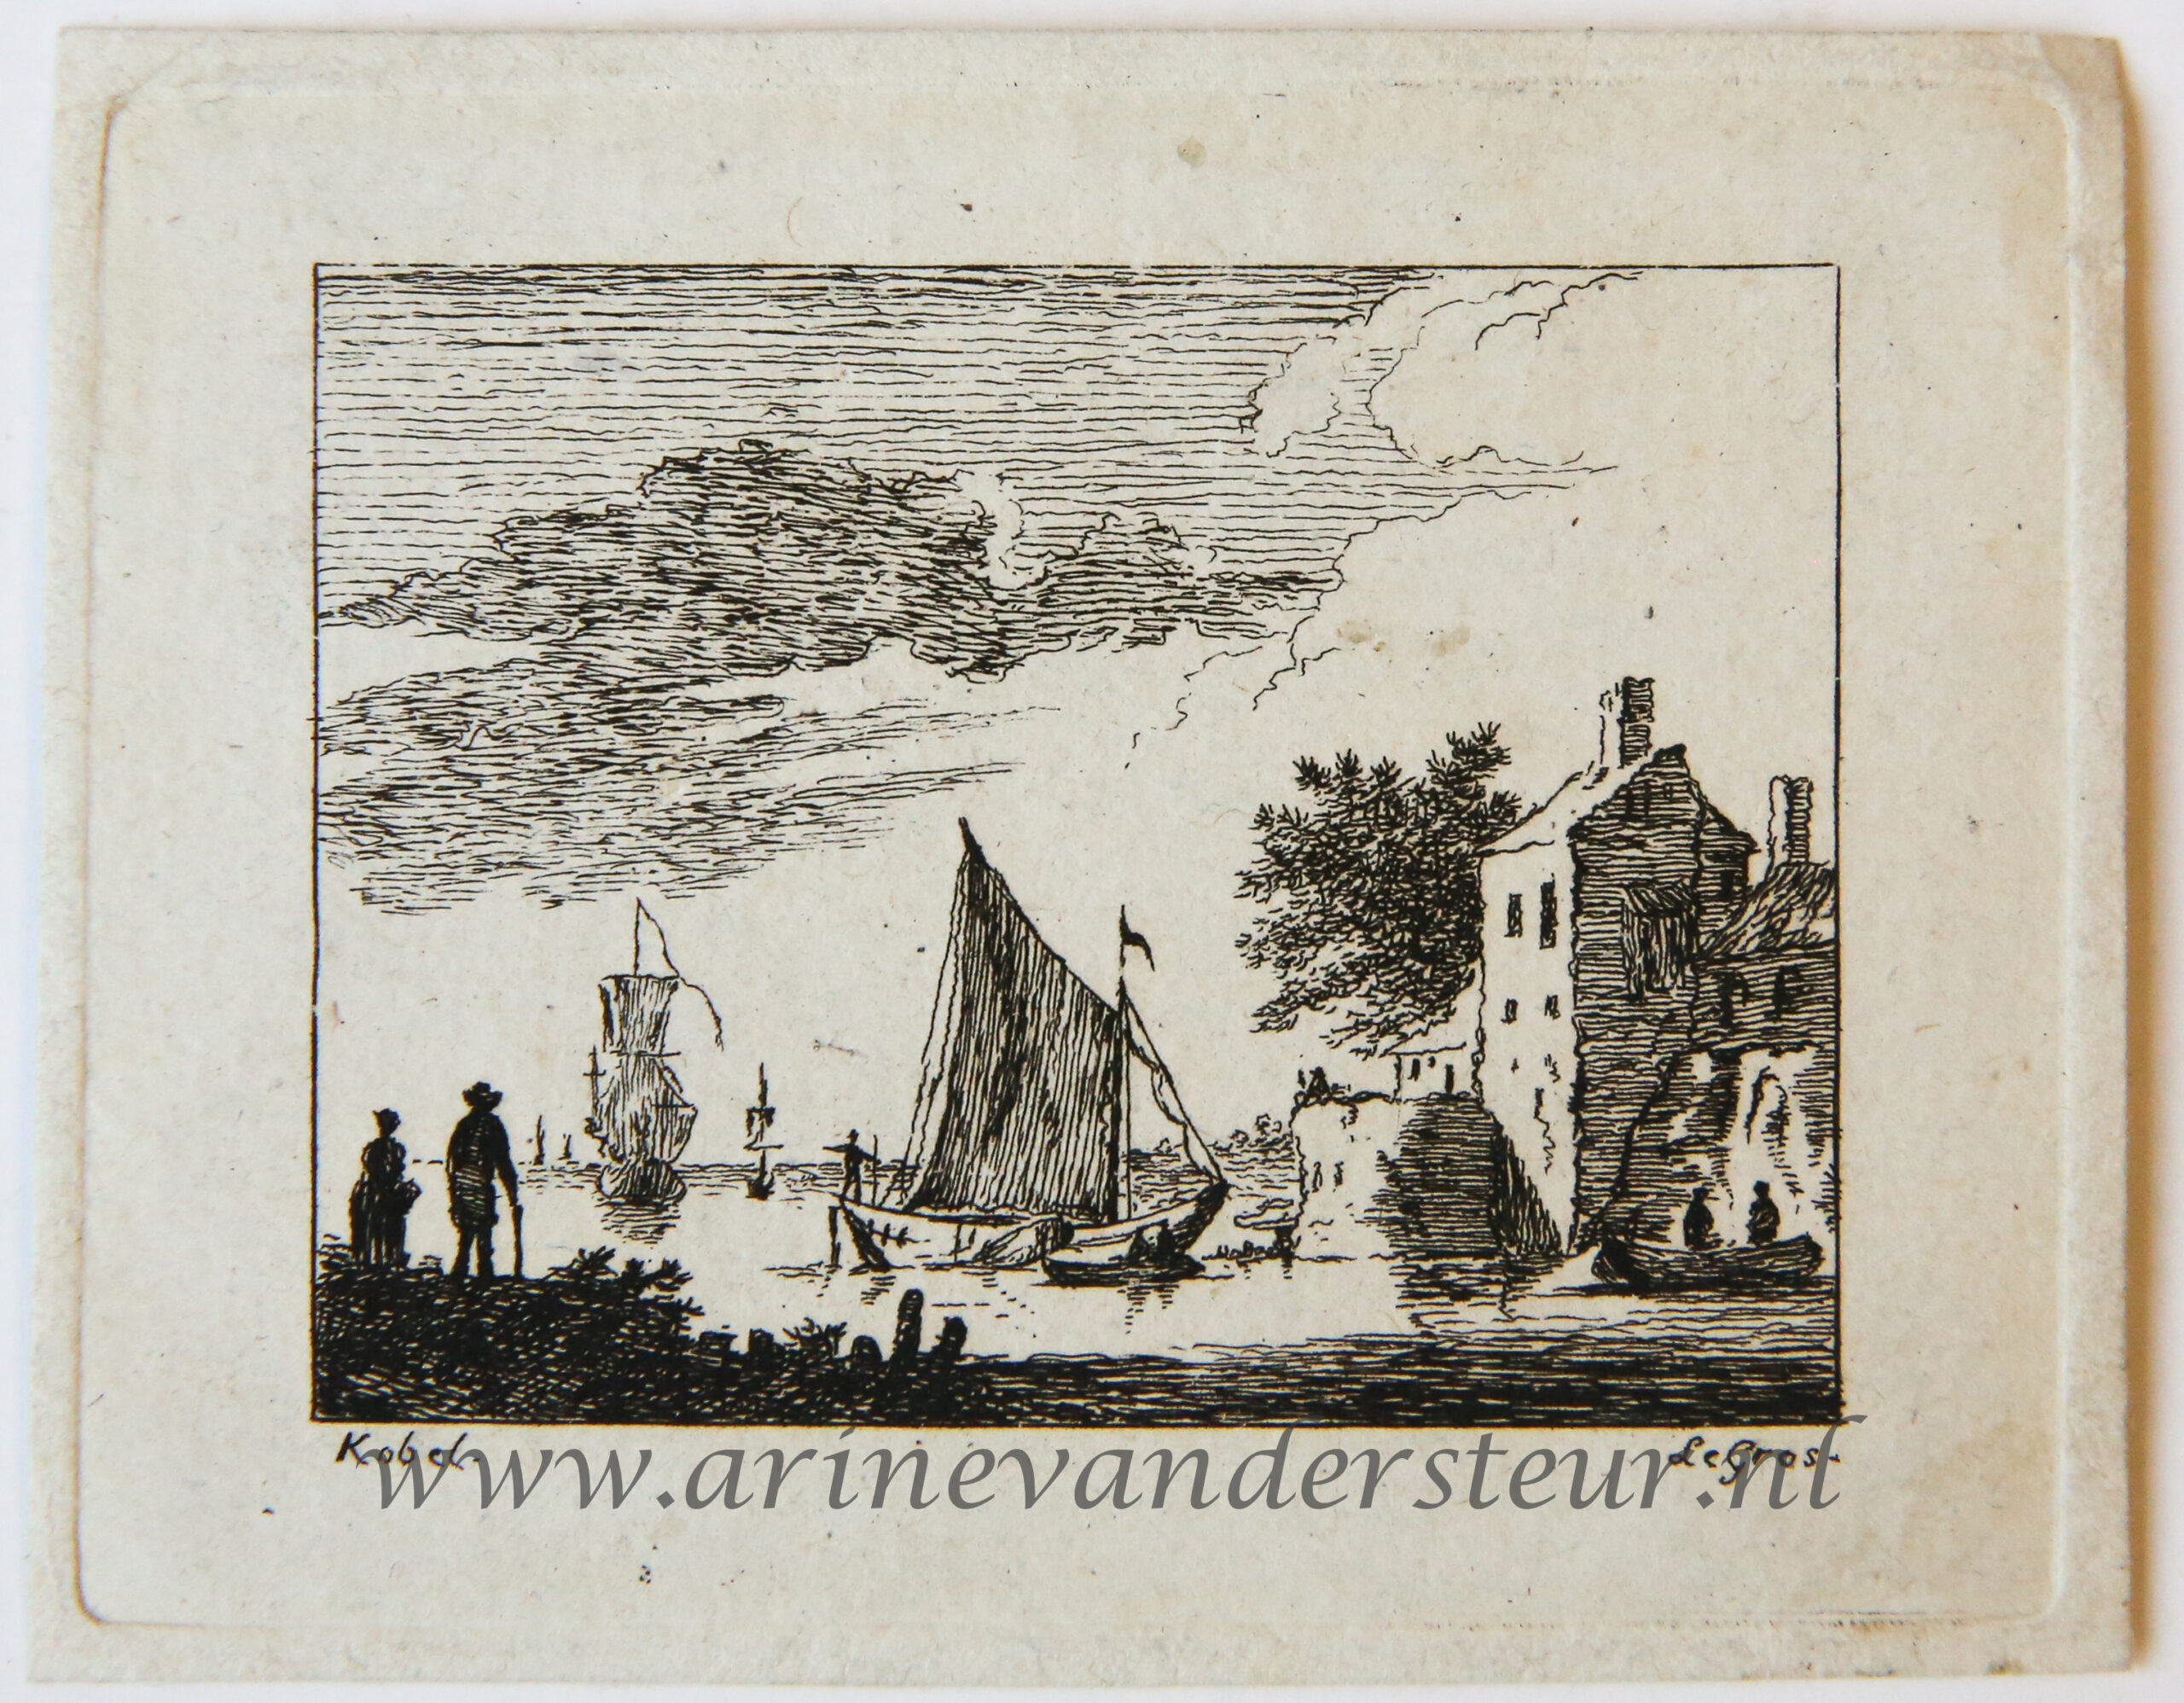 [Miniature antique print, etching] Salvator Legros, after H. Köbel, River landscape, published ca. 1788.